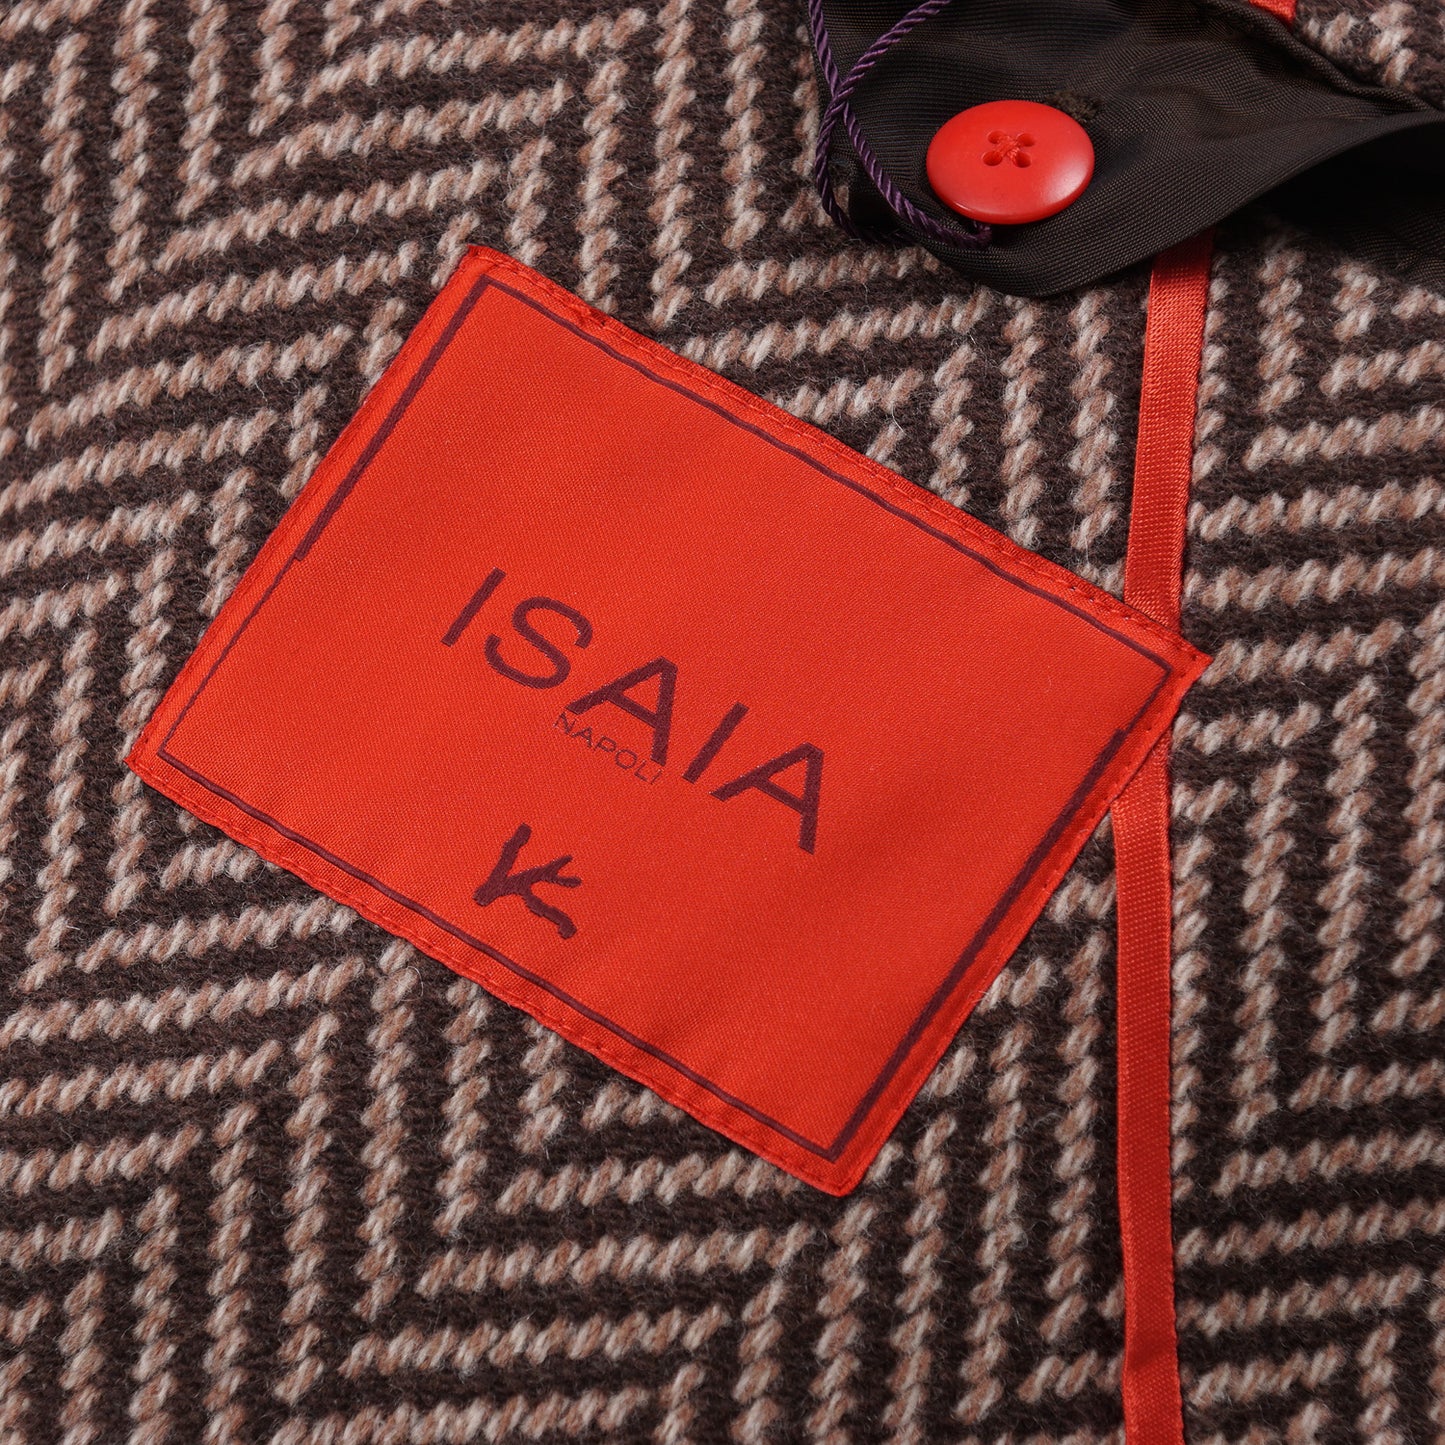 Isaia Soft Herringbone Wool-Cashmere Overcoat - Top Shelf Apparel